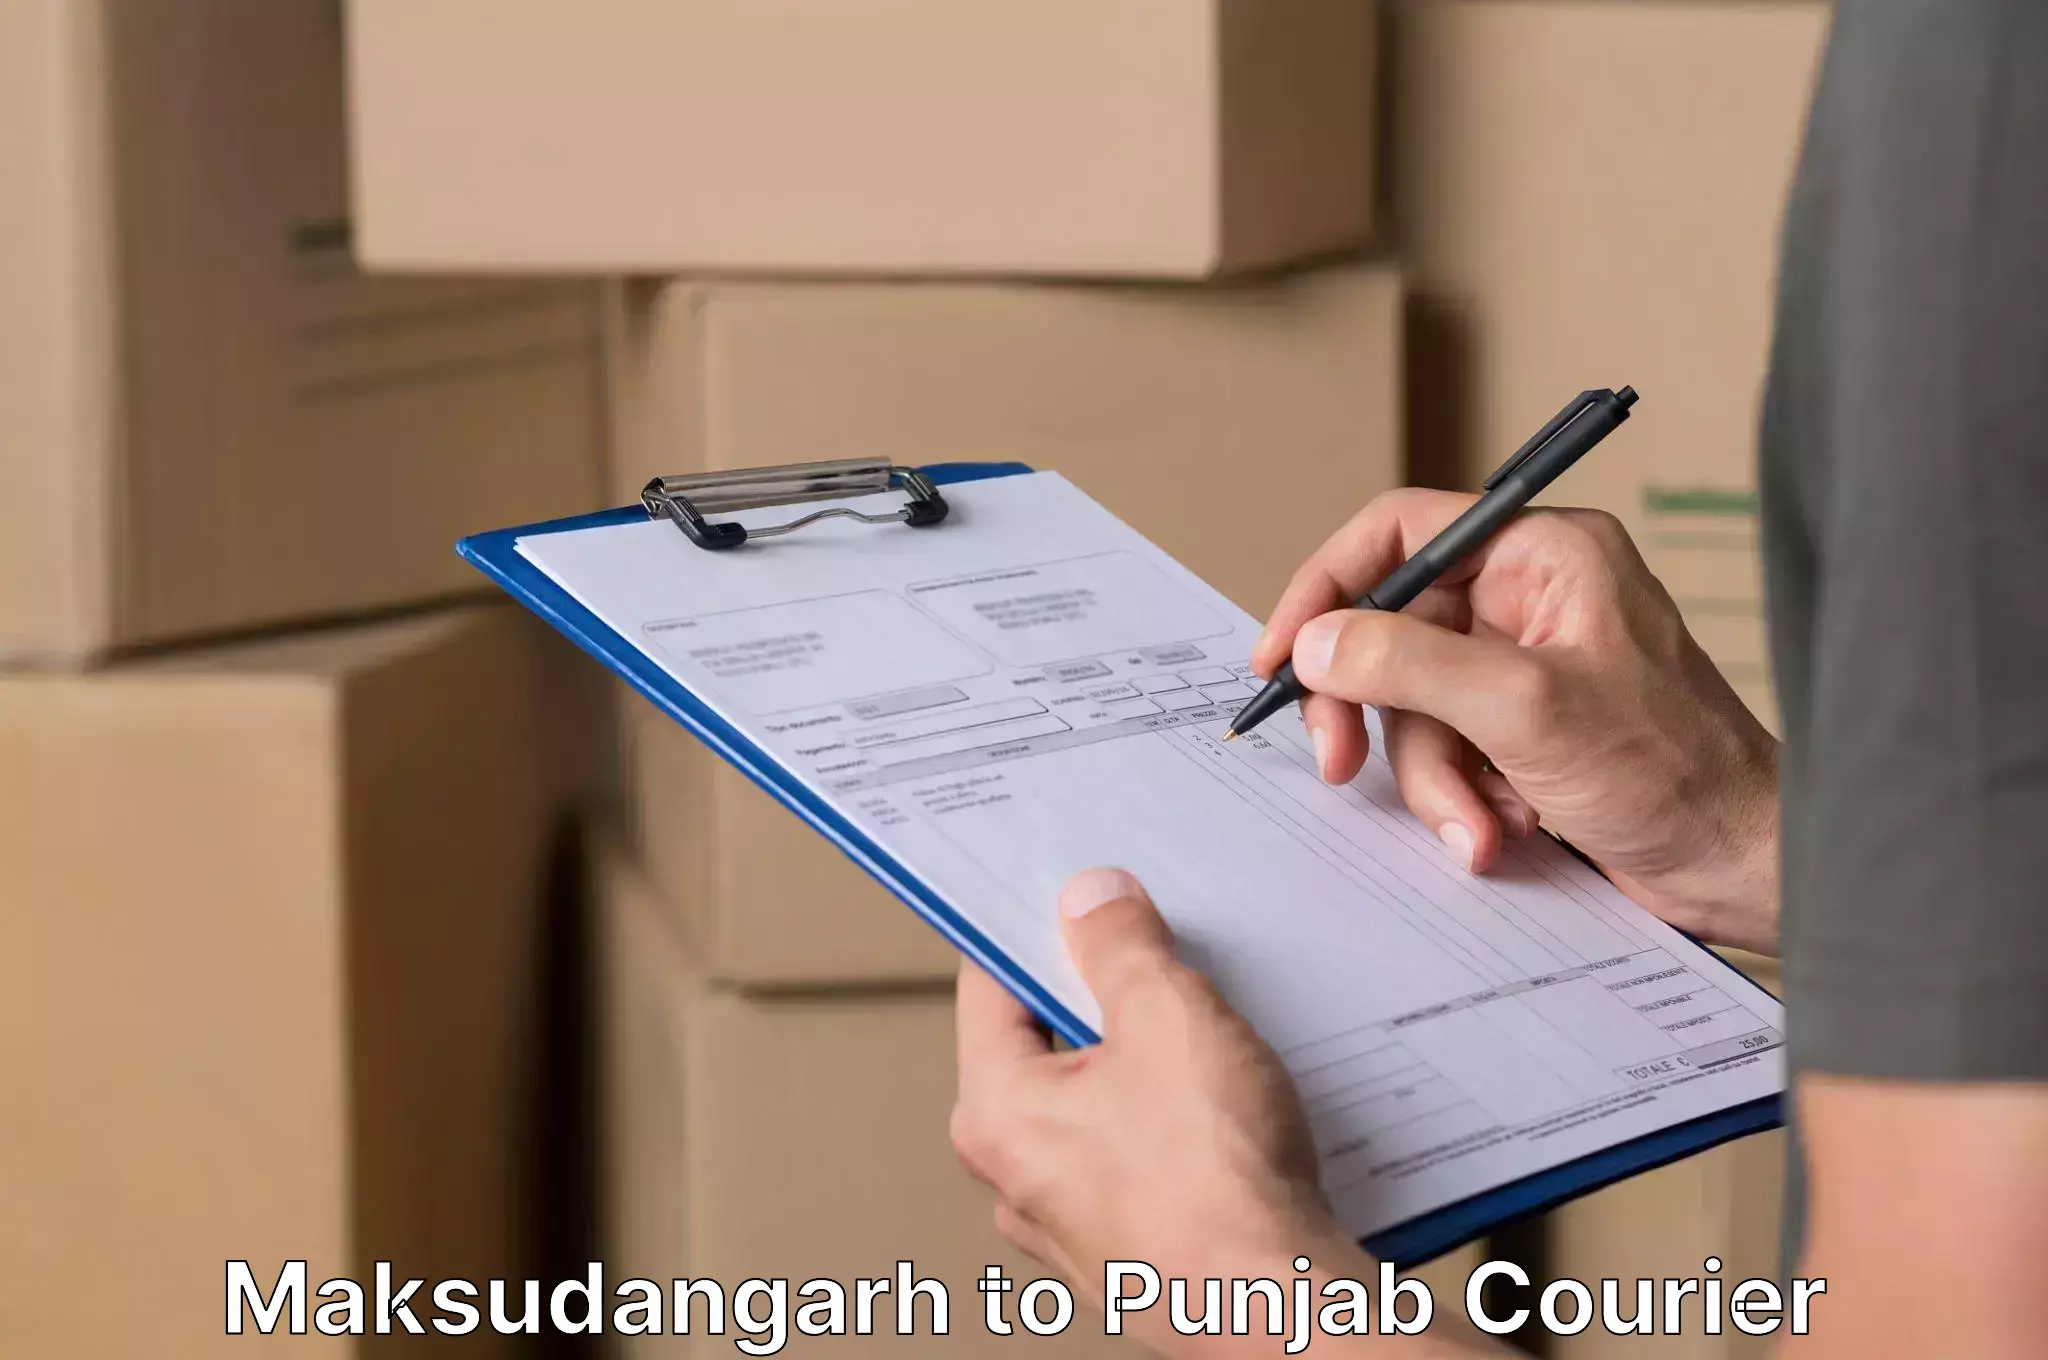 Furniture moving specialists Maksudangarh to Punjab